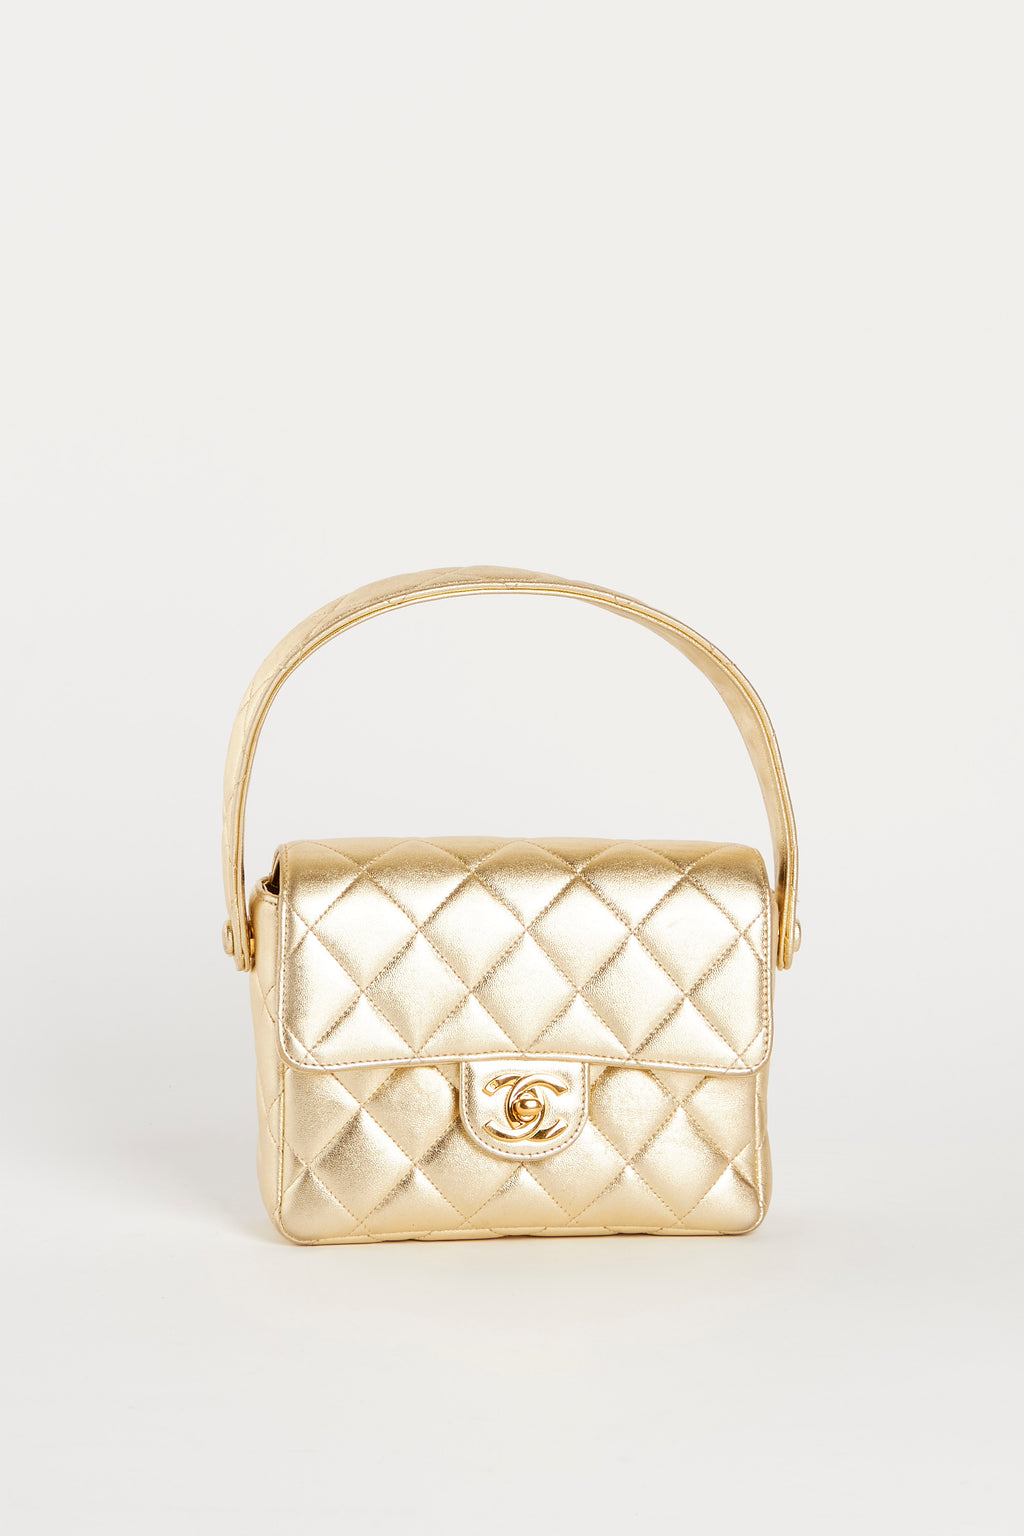 RARE Chanel Gold Leather Mini Top Handle Bag